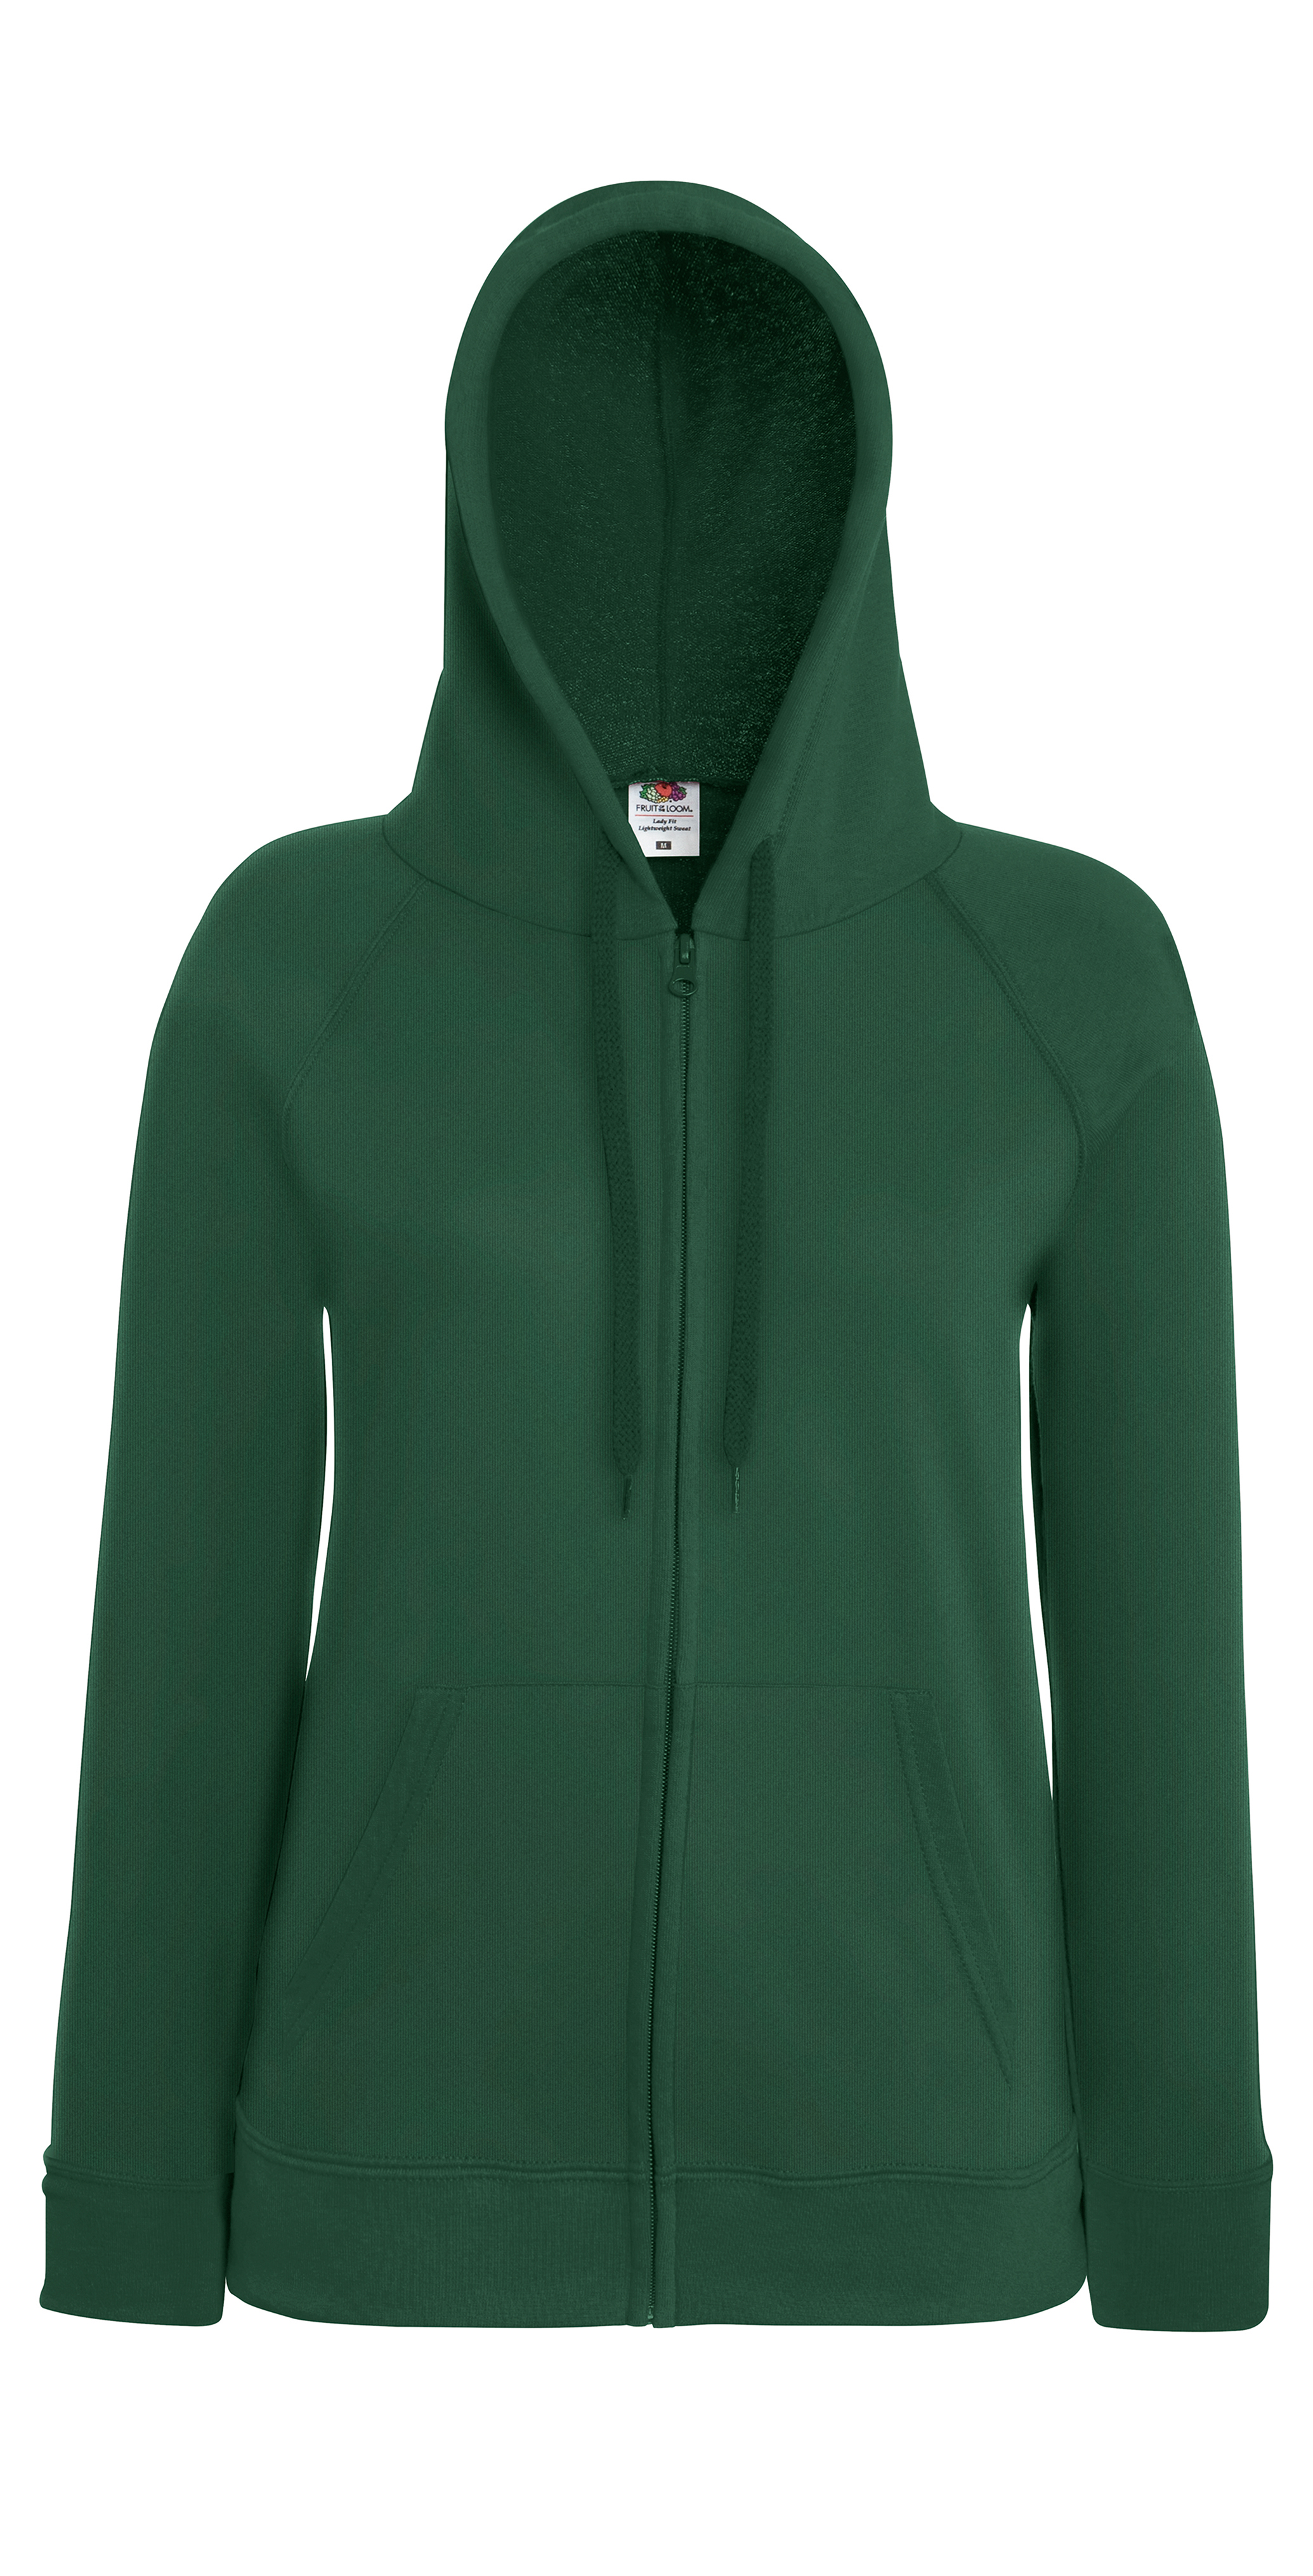 ax-httpswebsystems.s3.amazonaws.comtmp_for_downloadfruit-of-the-loom-womens-lightweight-hooded-sweatshirt-jacket-bottle-green.jpeg